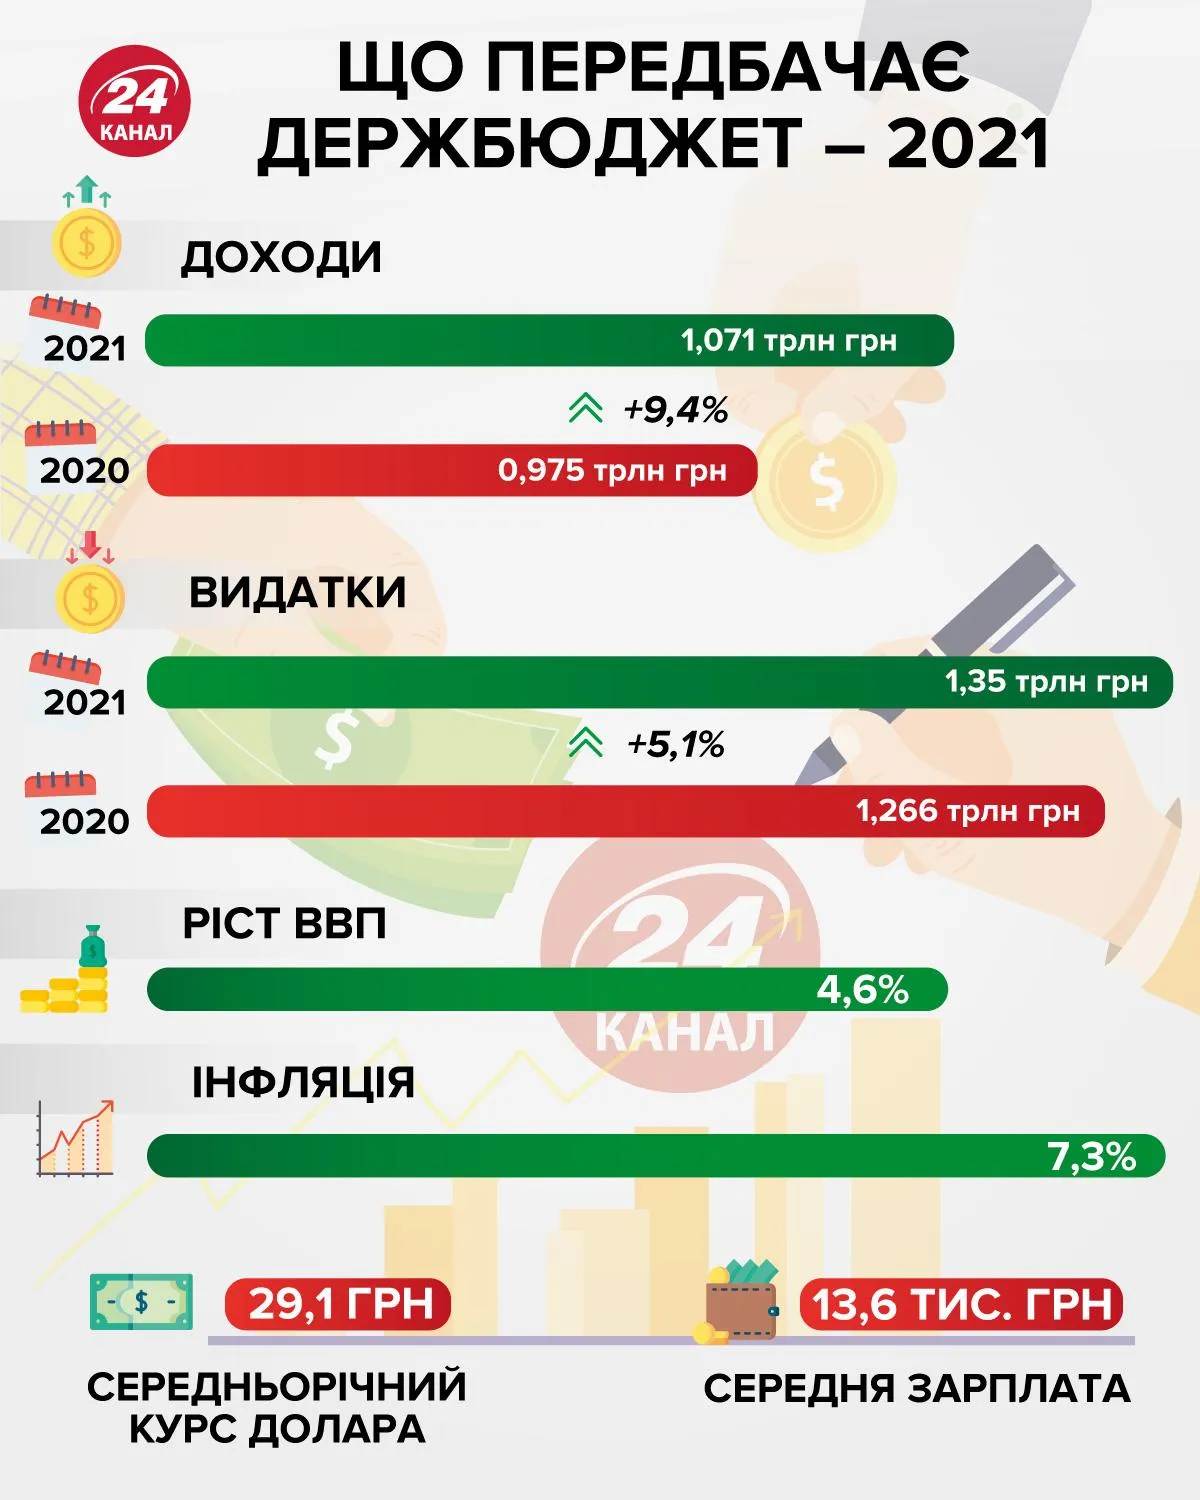 Бюджет - 2021 інфографіка 24 канал